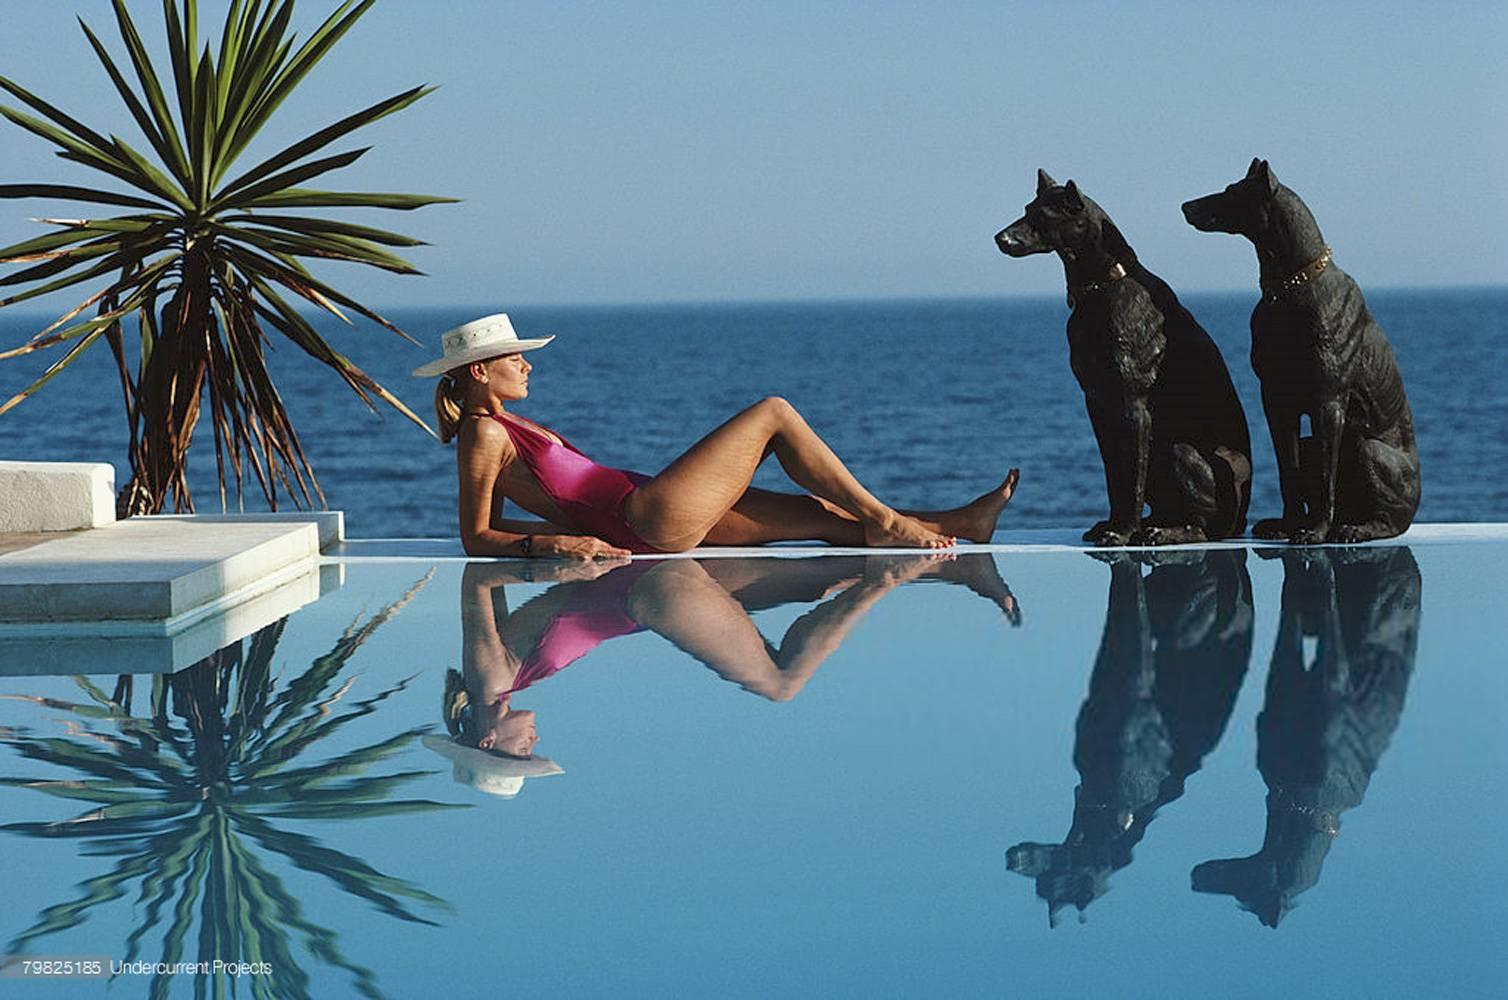 Slim Aarons Portrait Photograph - Marbella Pool (Estate Edition, Free Shipping)